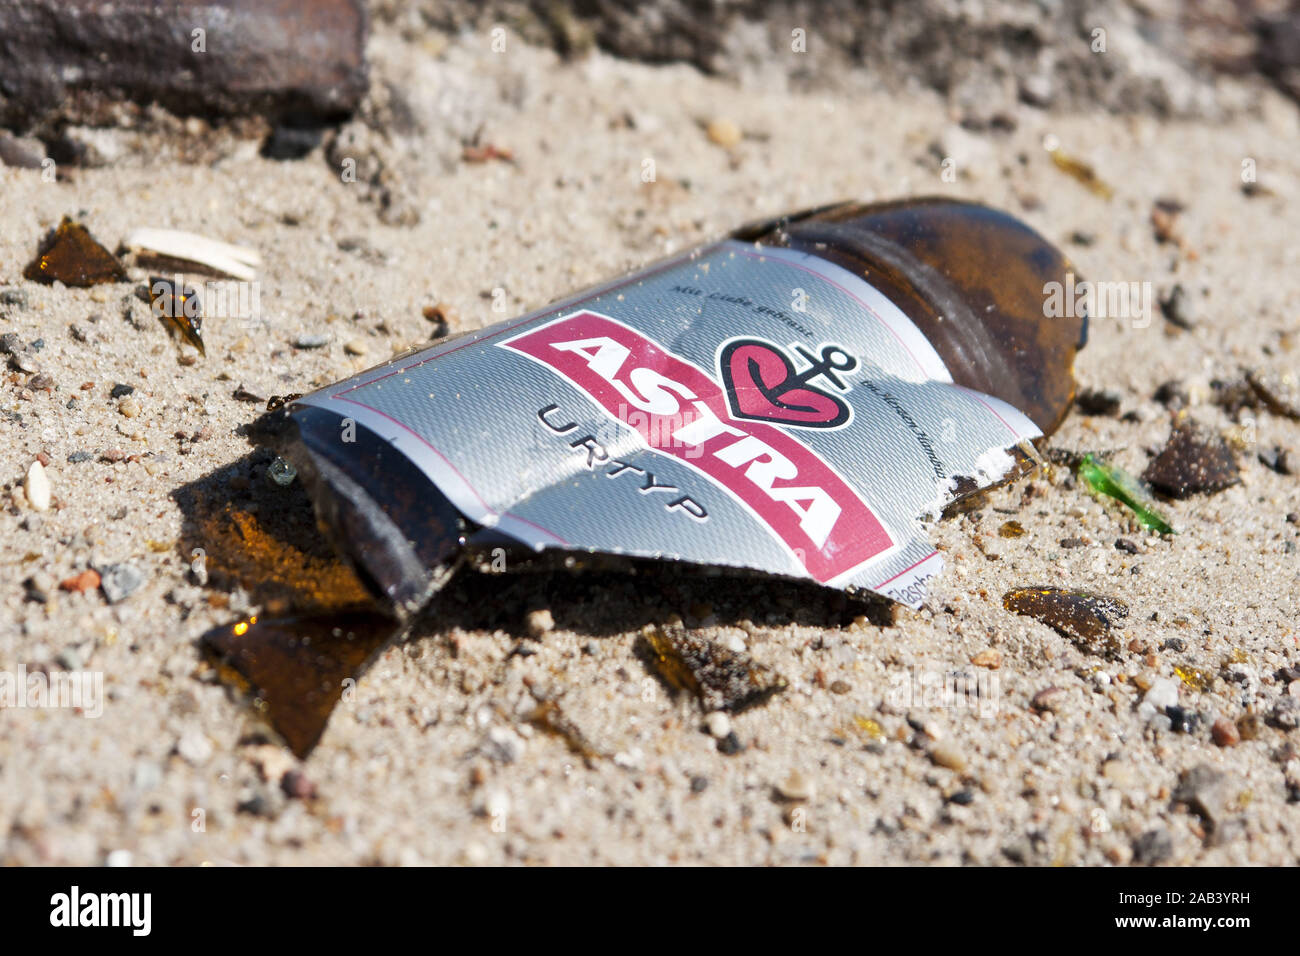 Kaputte Astra Bierflasche am Strand |Broken Astra beer bottle on the beach| Stock Photo